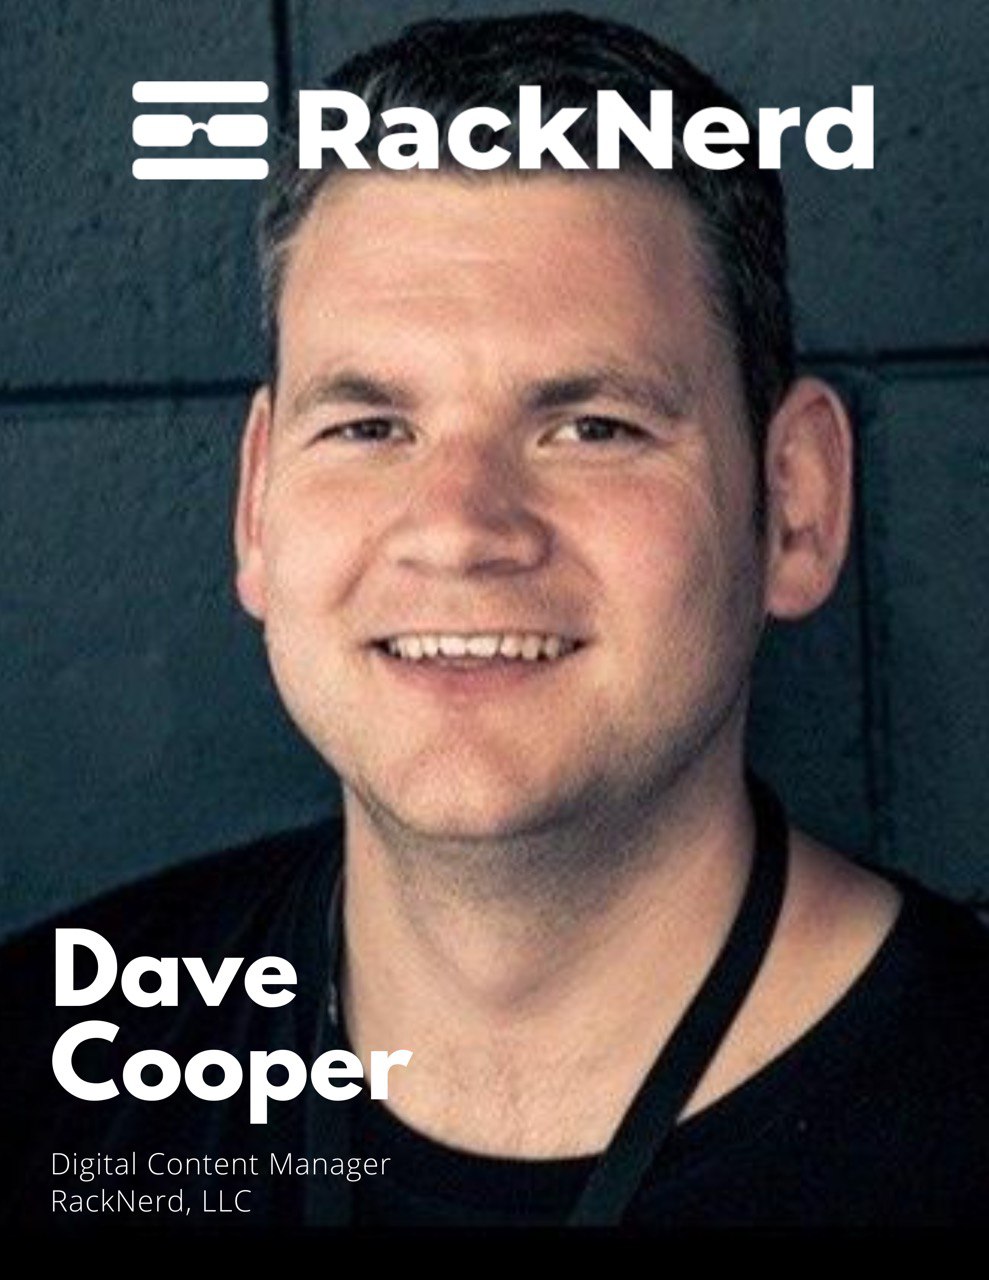 RackNerd Digital Content Manager, Dave Cooper